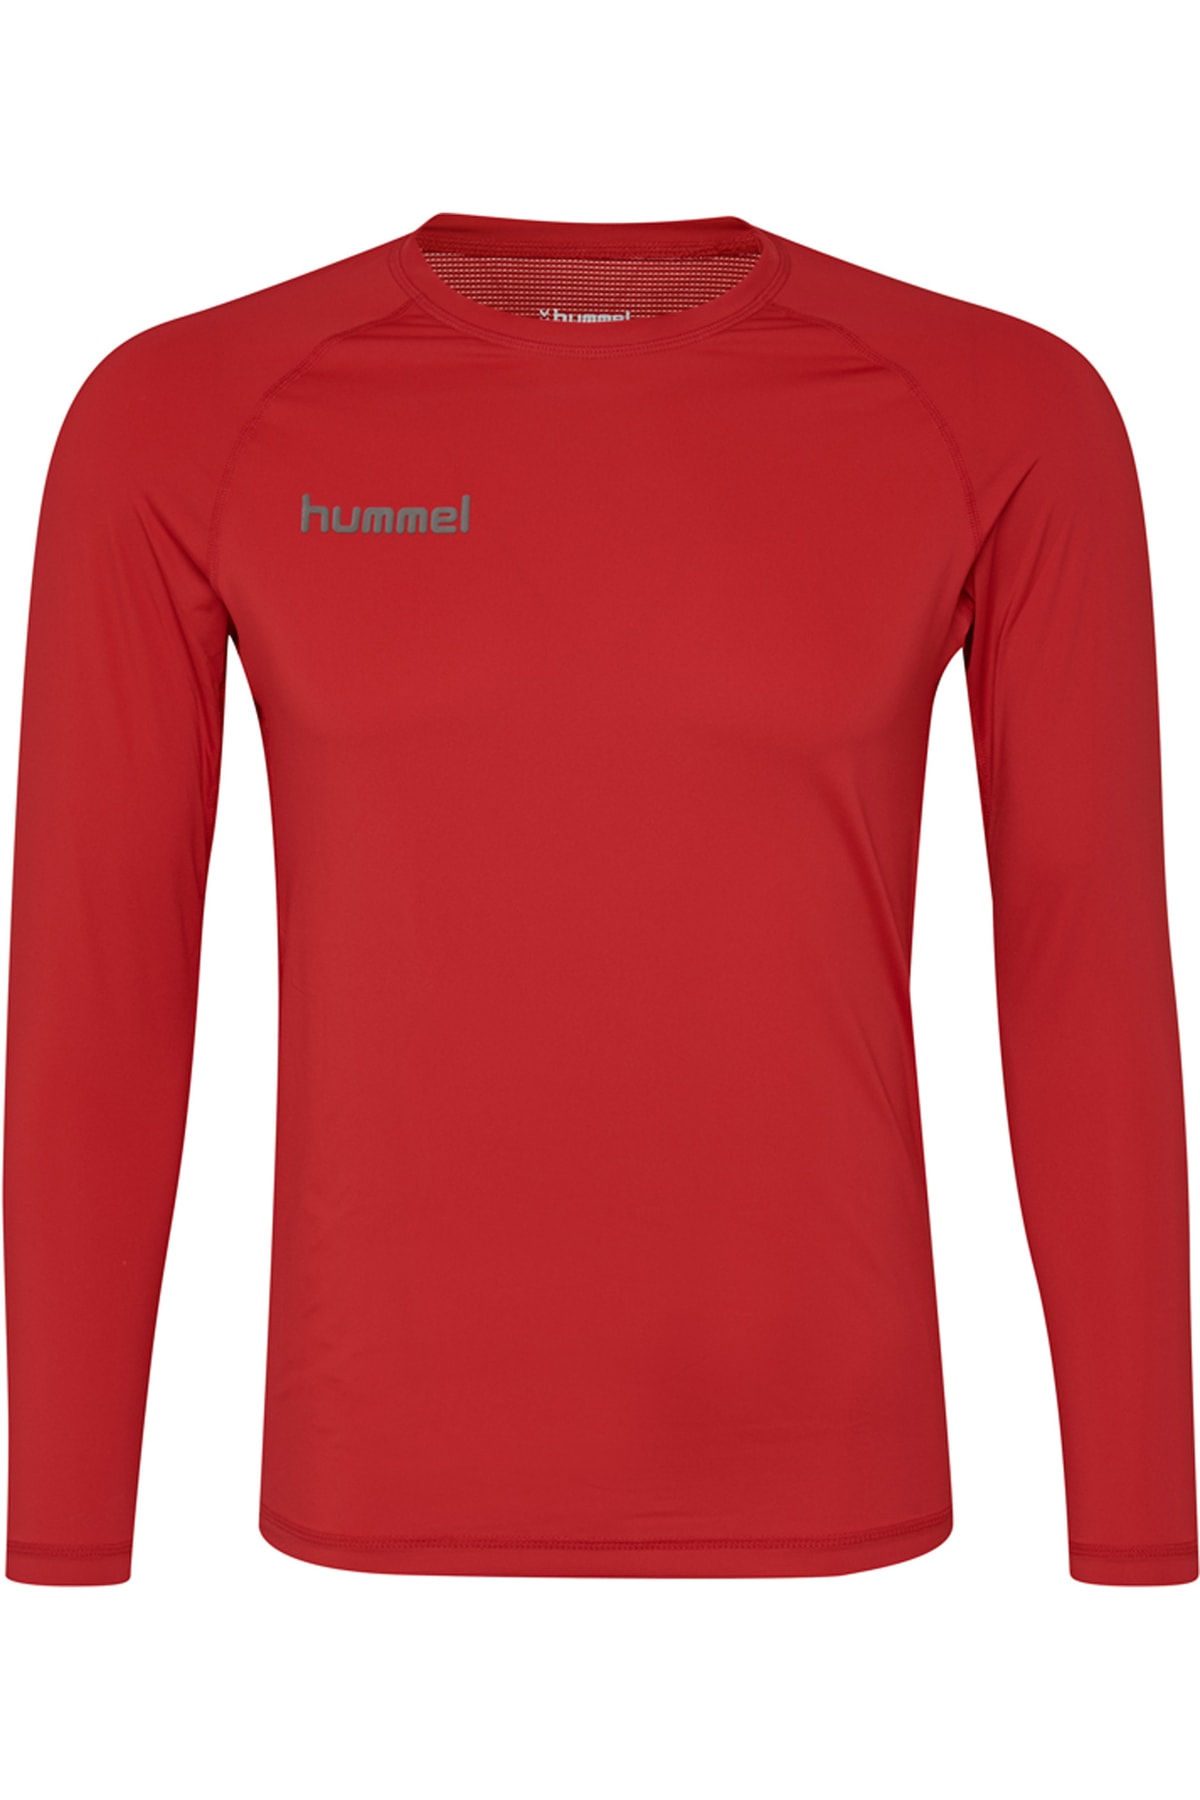 HUMMEL T-Shirt Rot Slim Fit